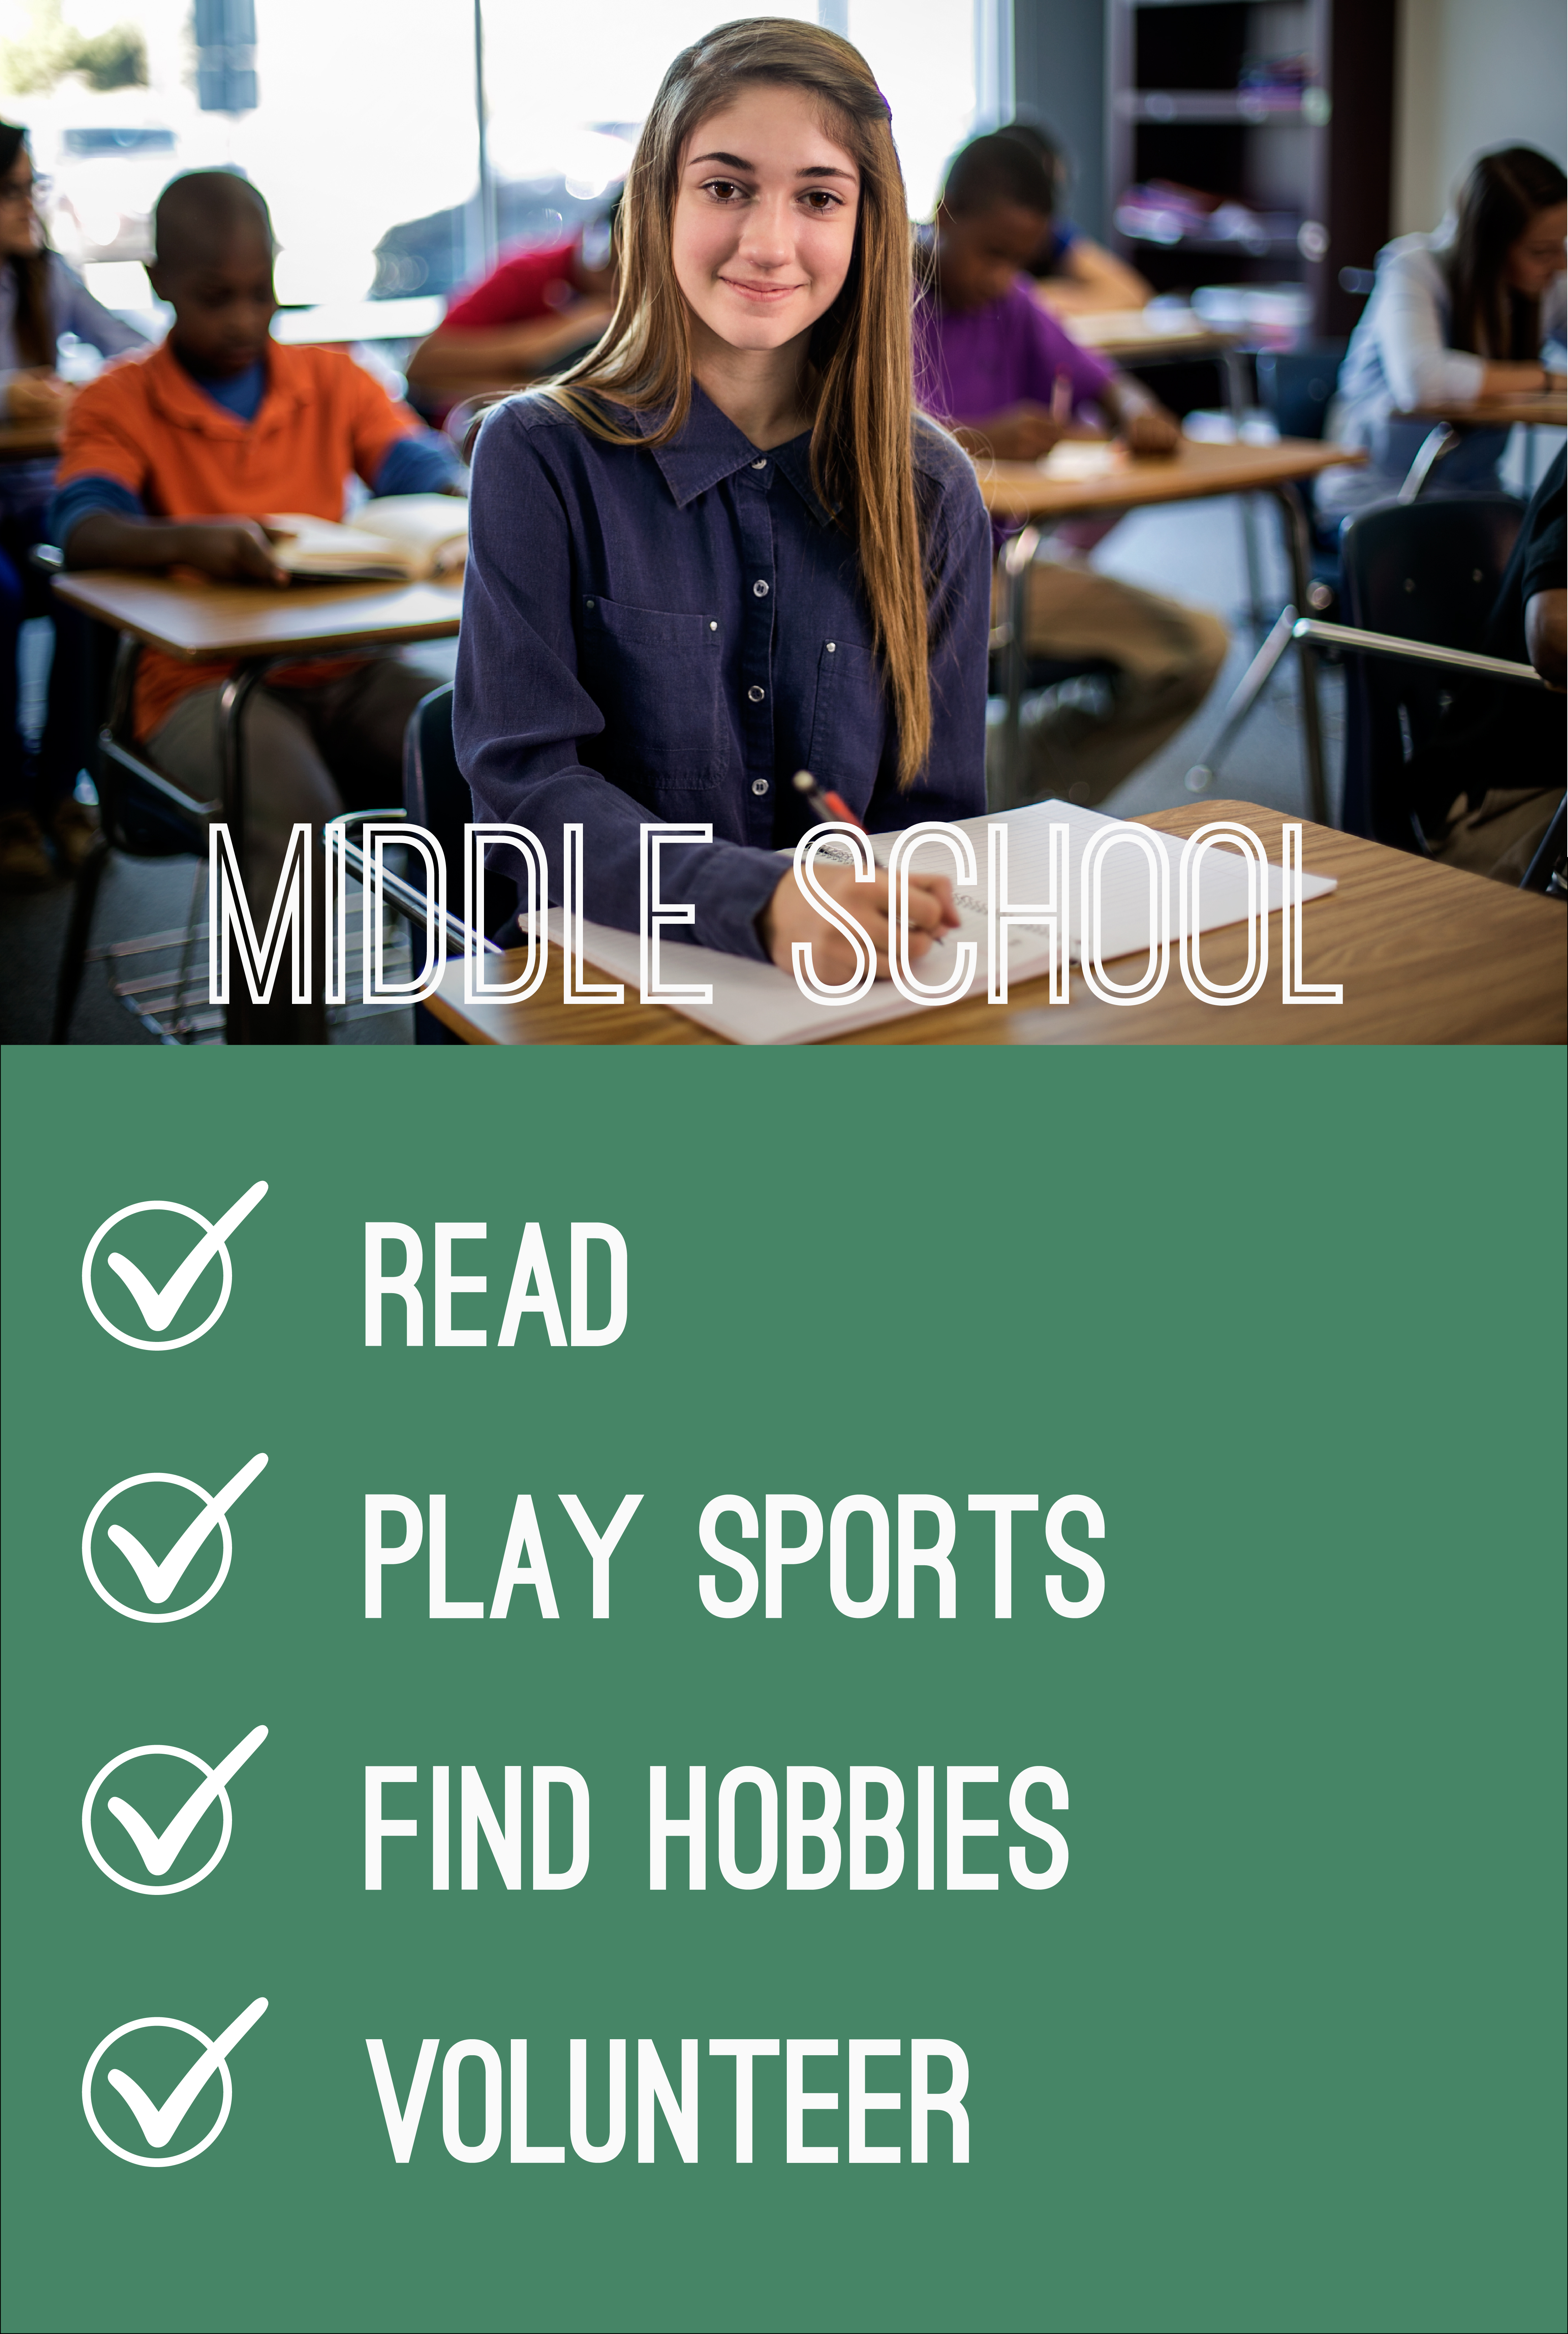 Middle School College Preparation Checklist